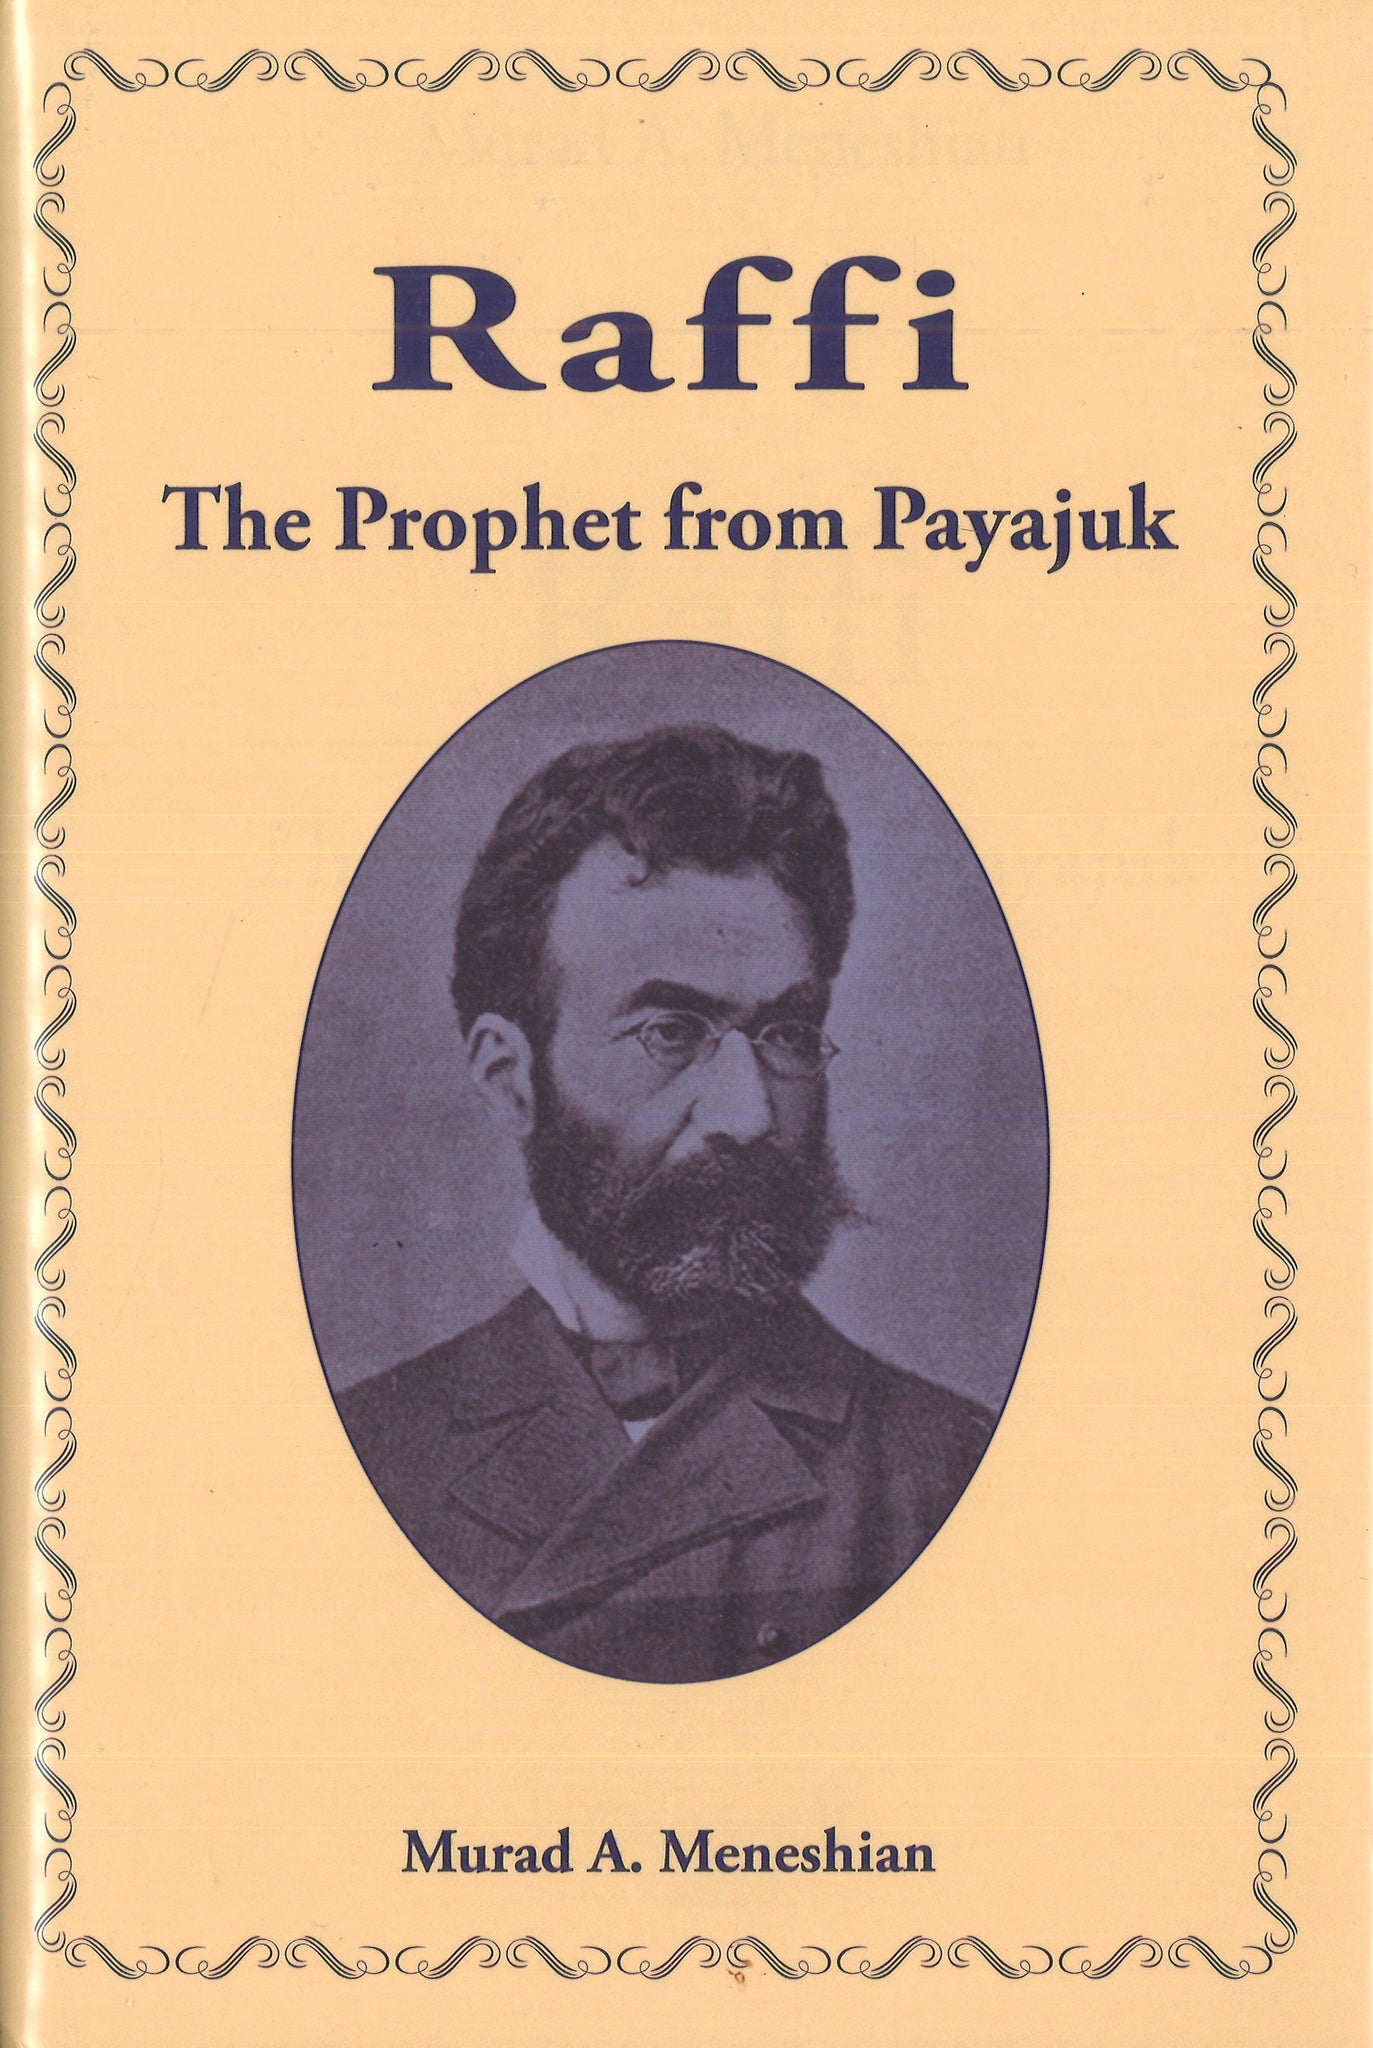 RAFFI: The Prophet from Payajuk